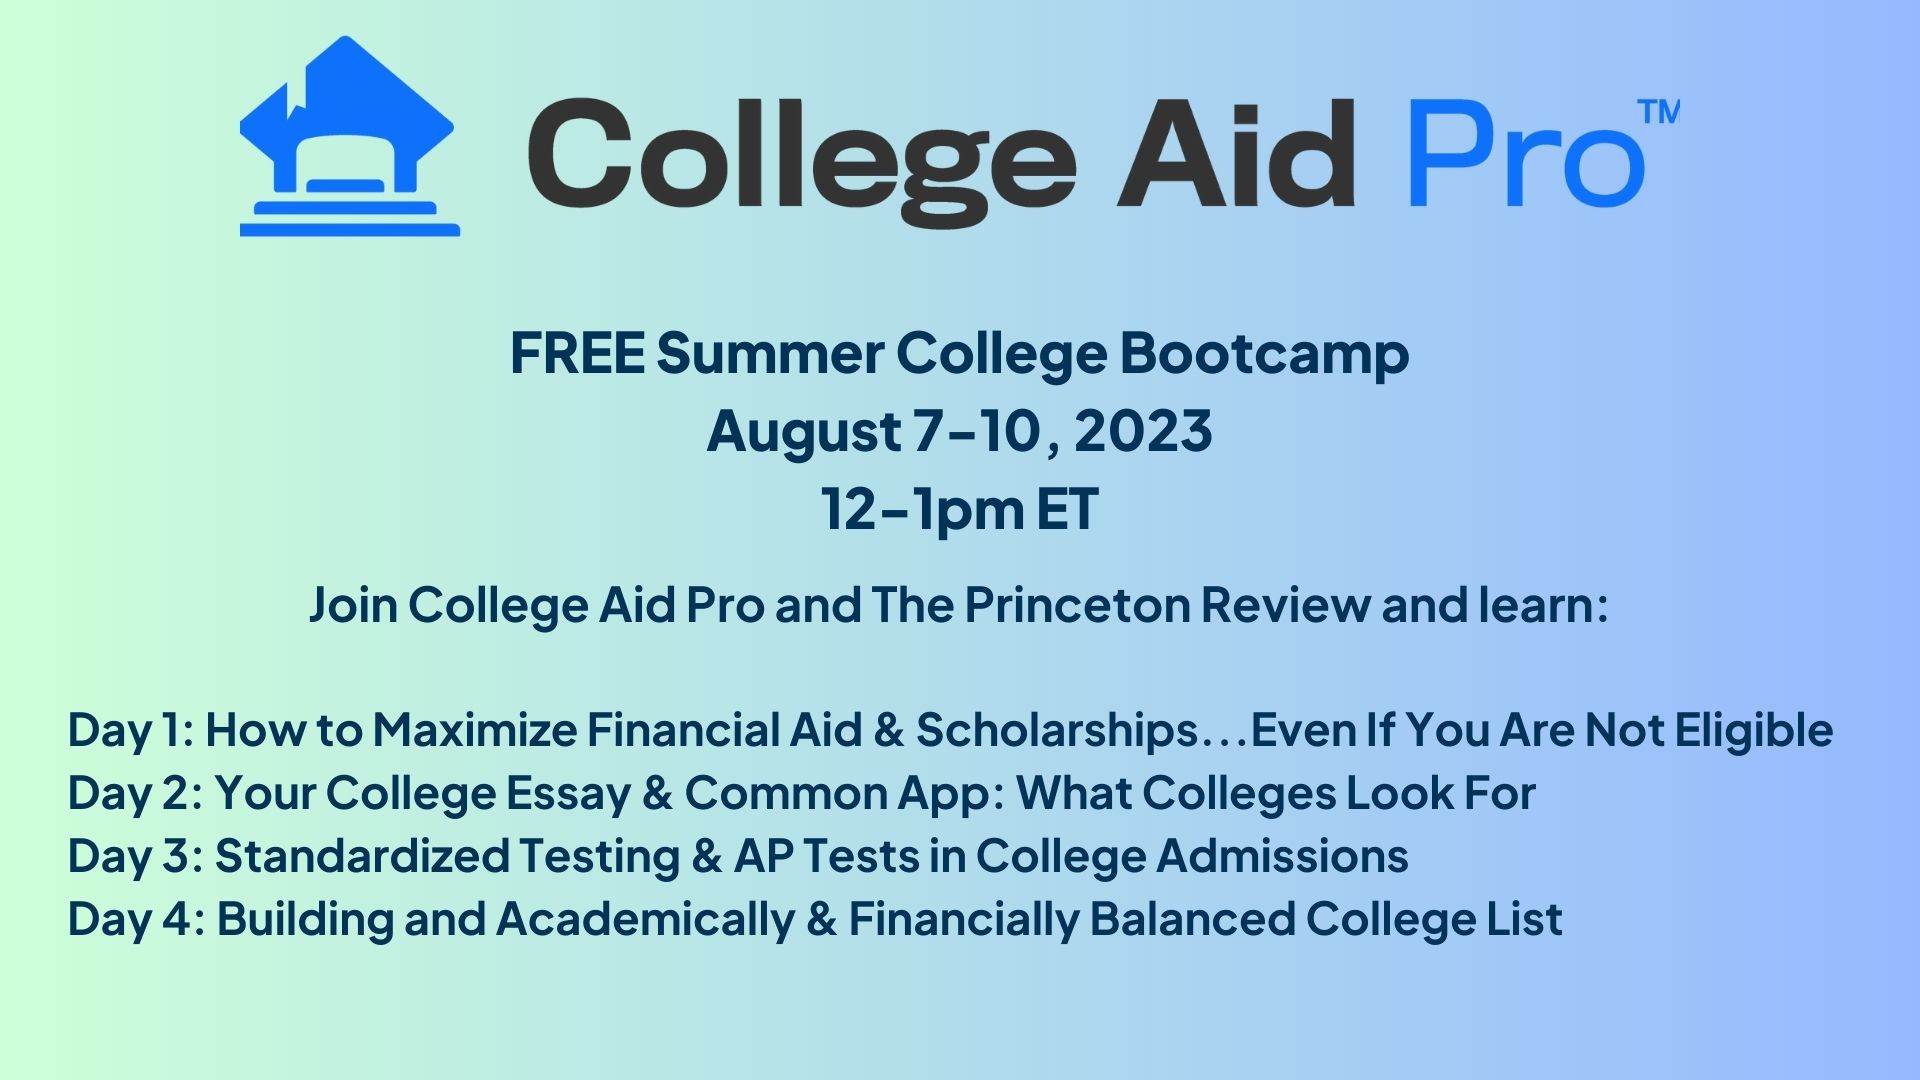 Summer bootcamp ad